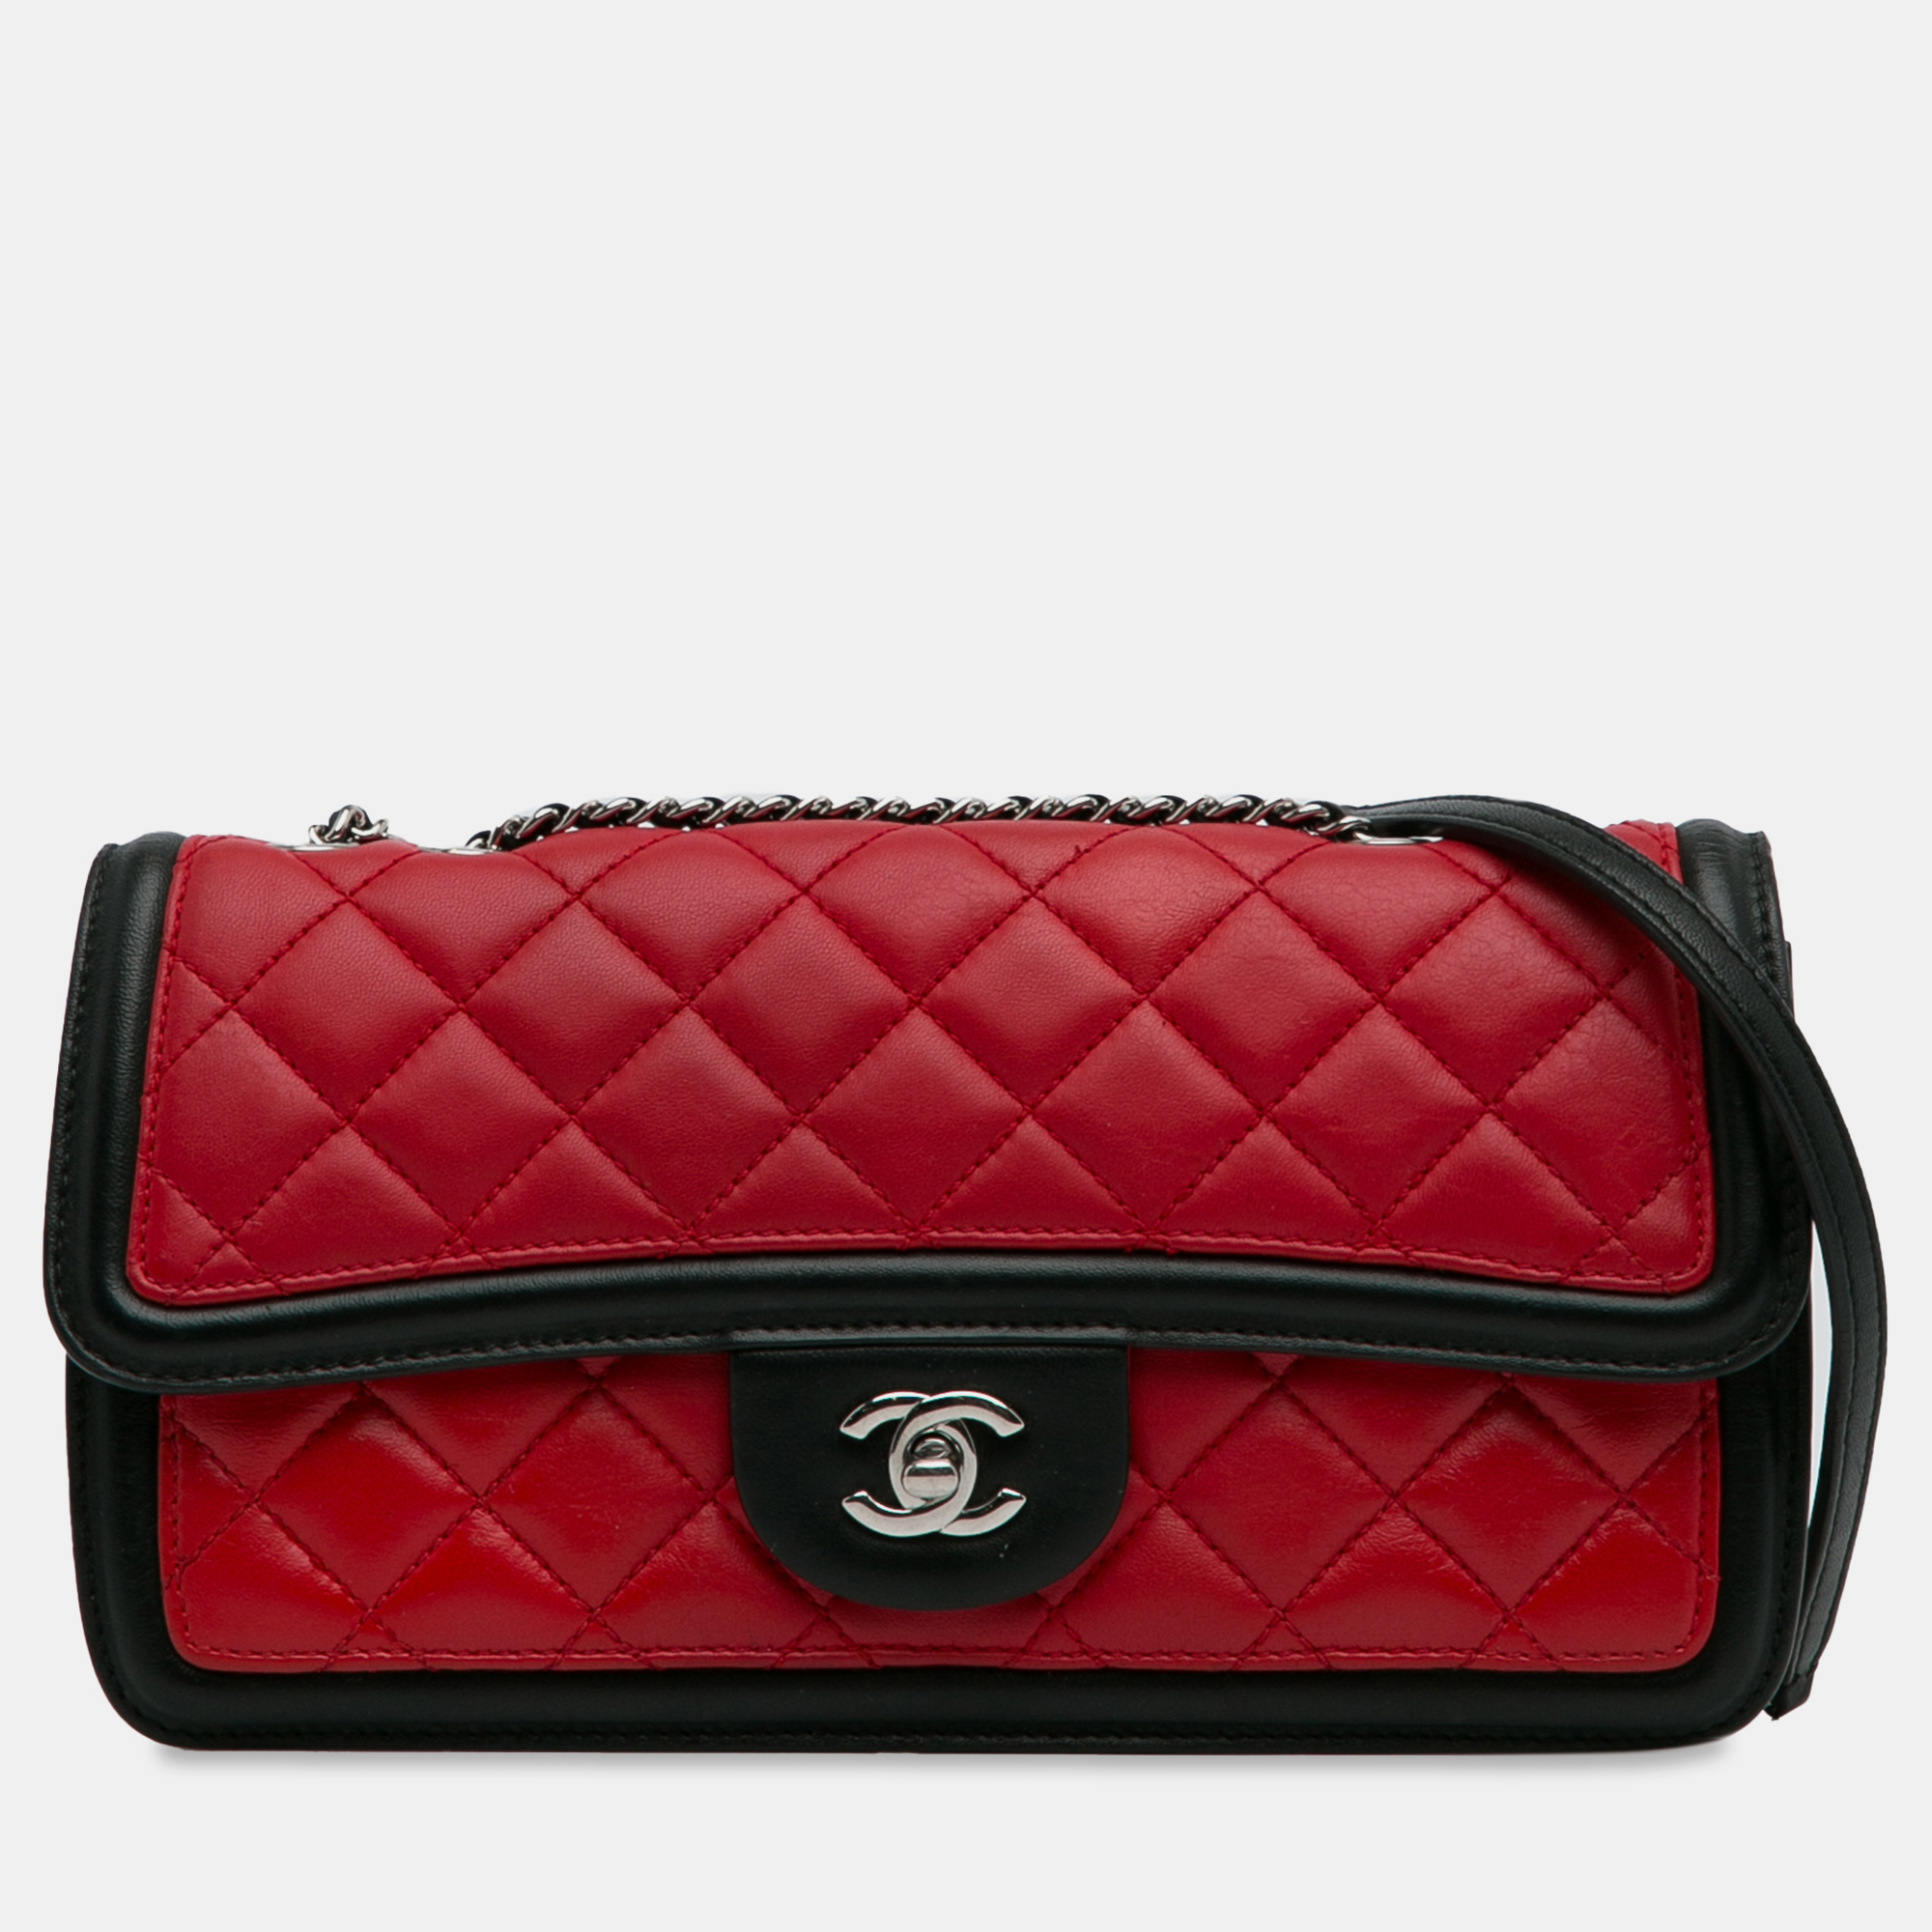 Chanel medium graphic flap handbag